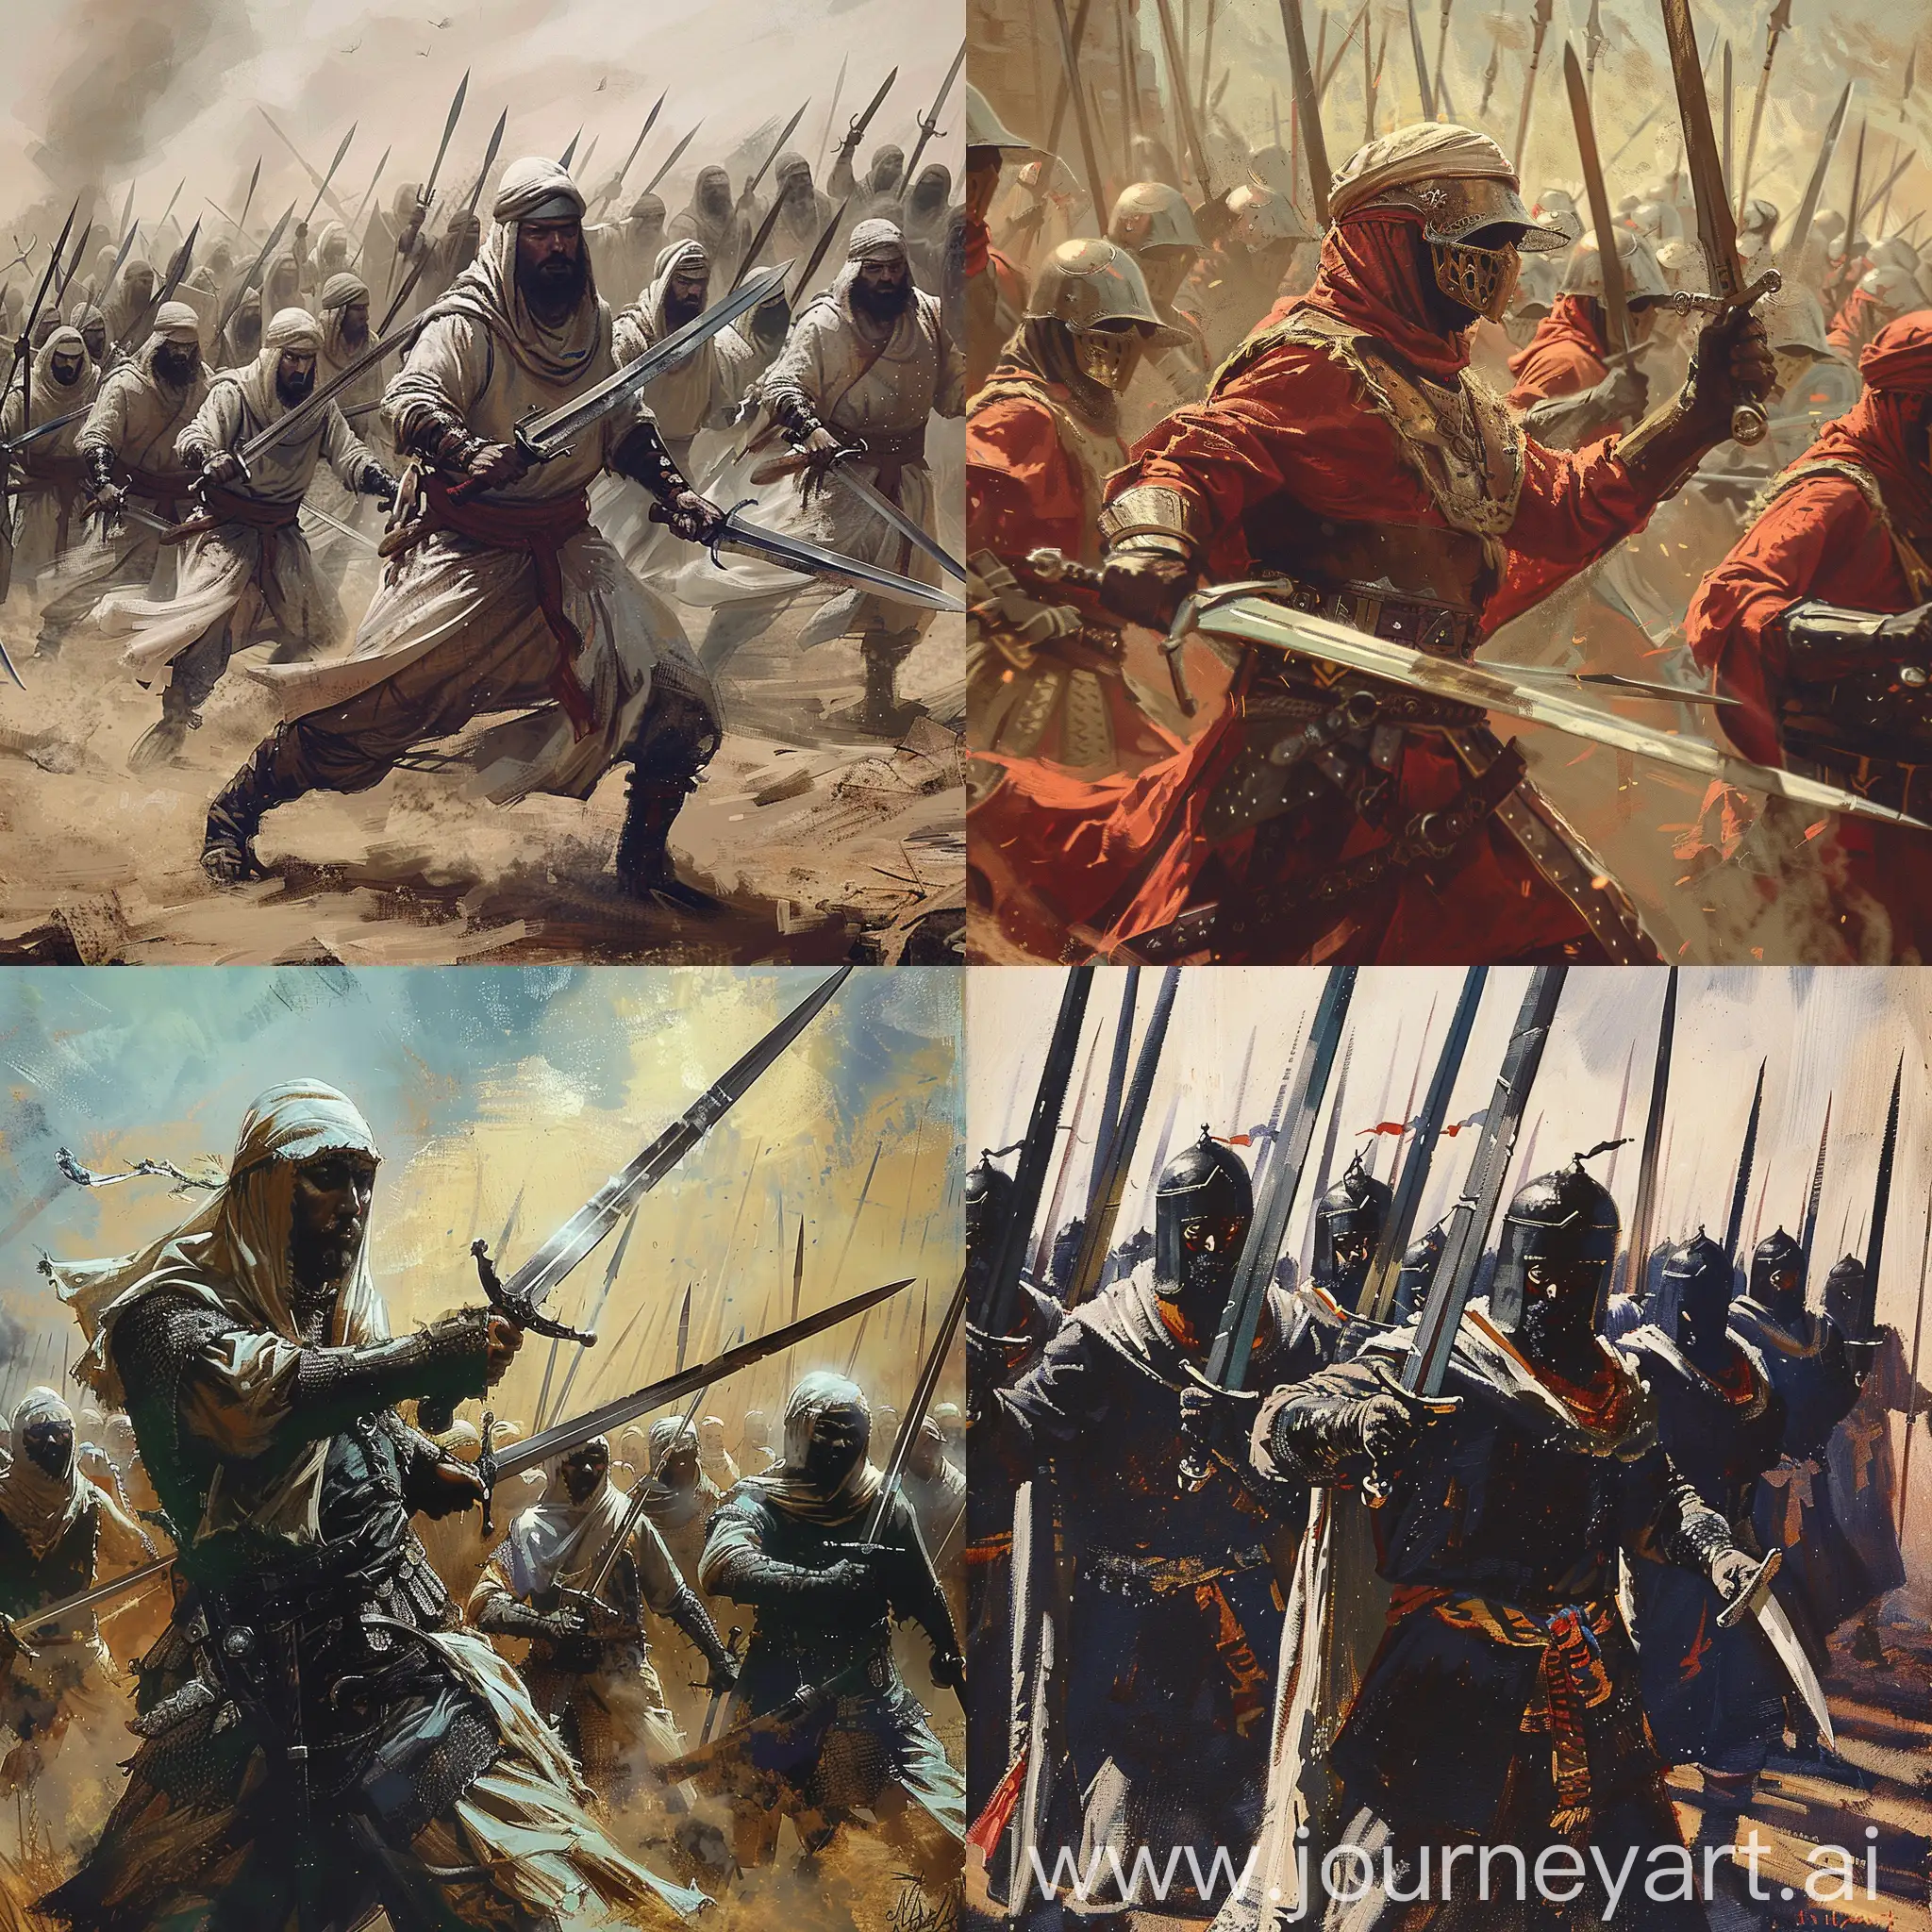 An army of Muslim knights wielding swords